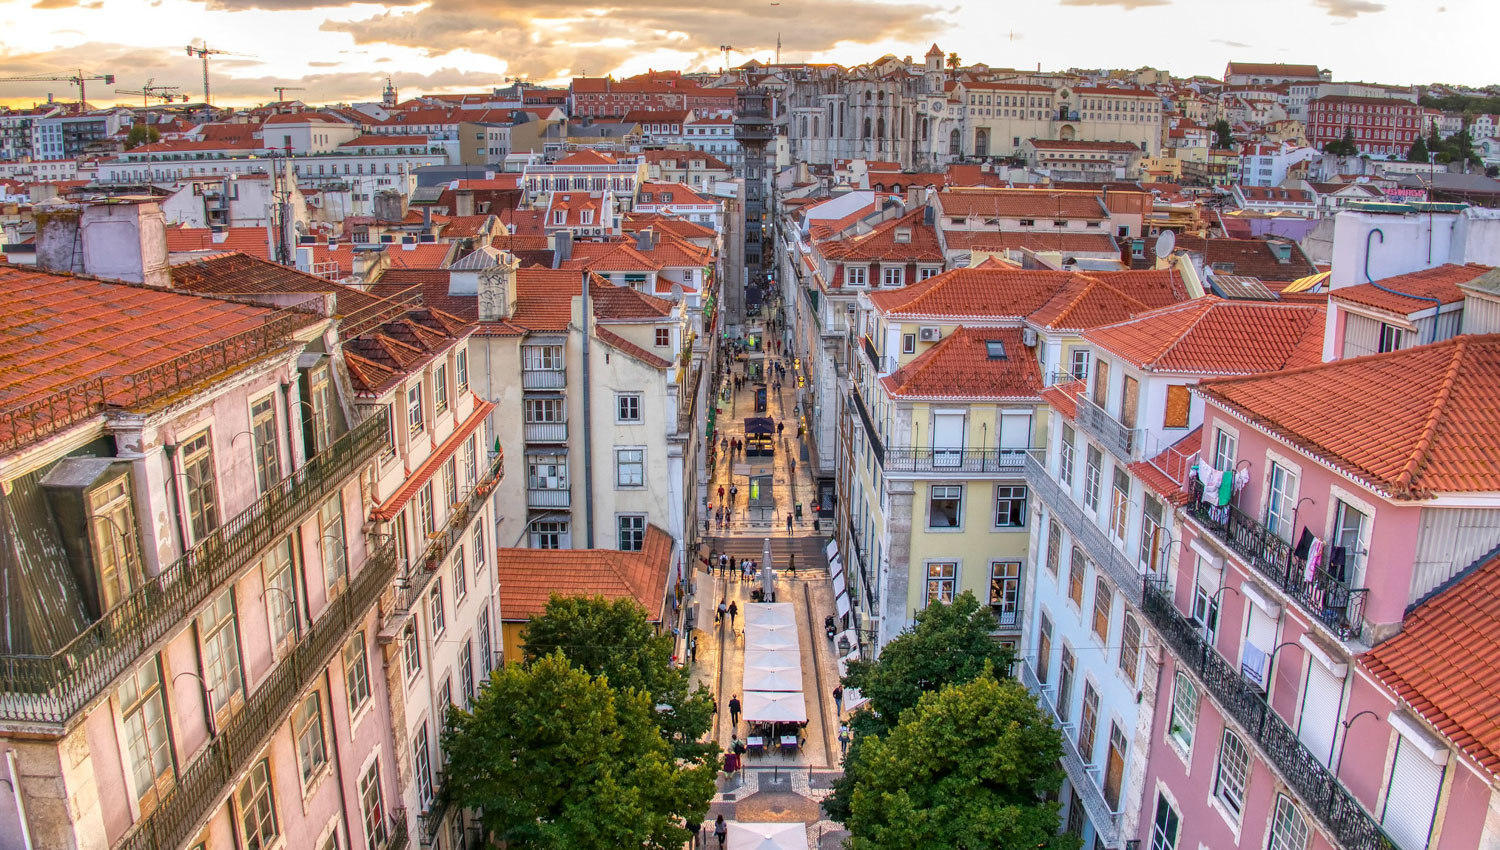 Chiado, Lisbon Photo Bert Kaufmann on Flickr